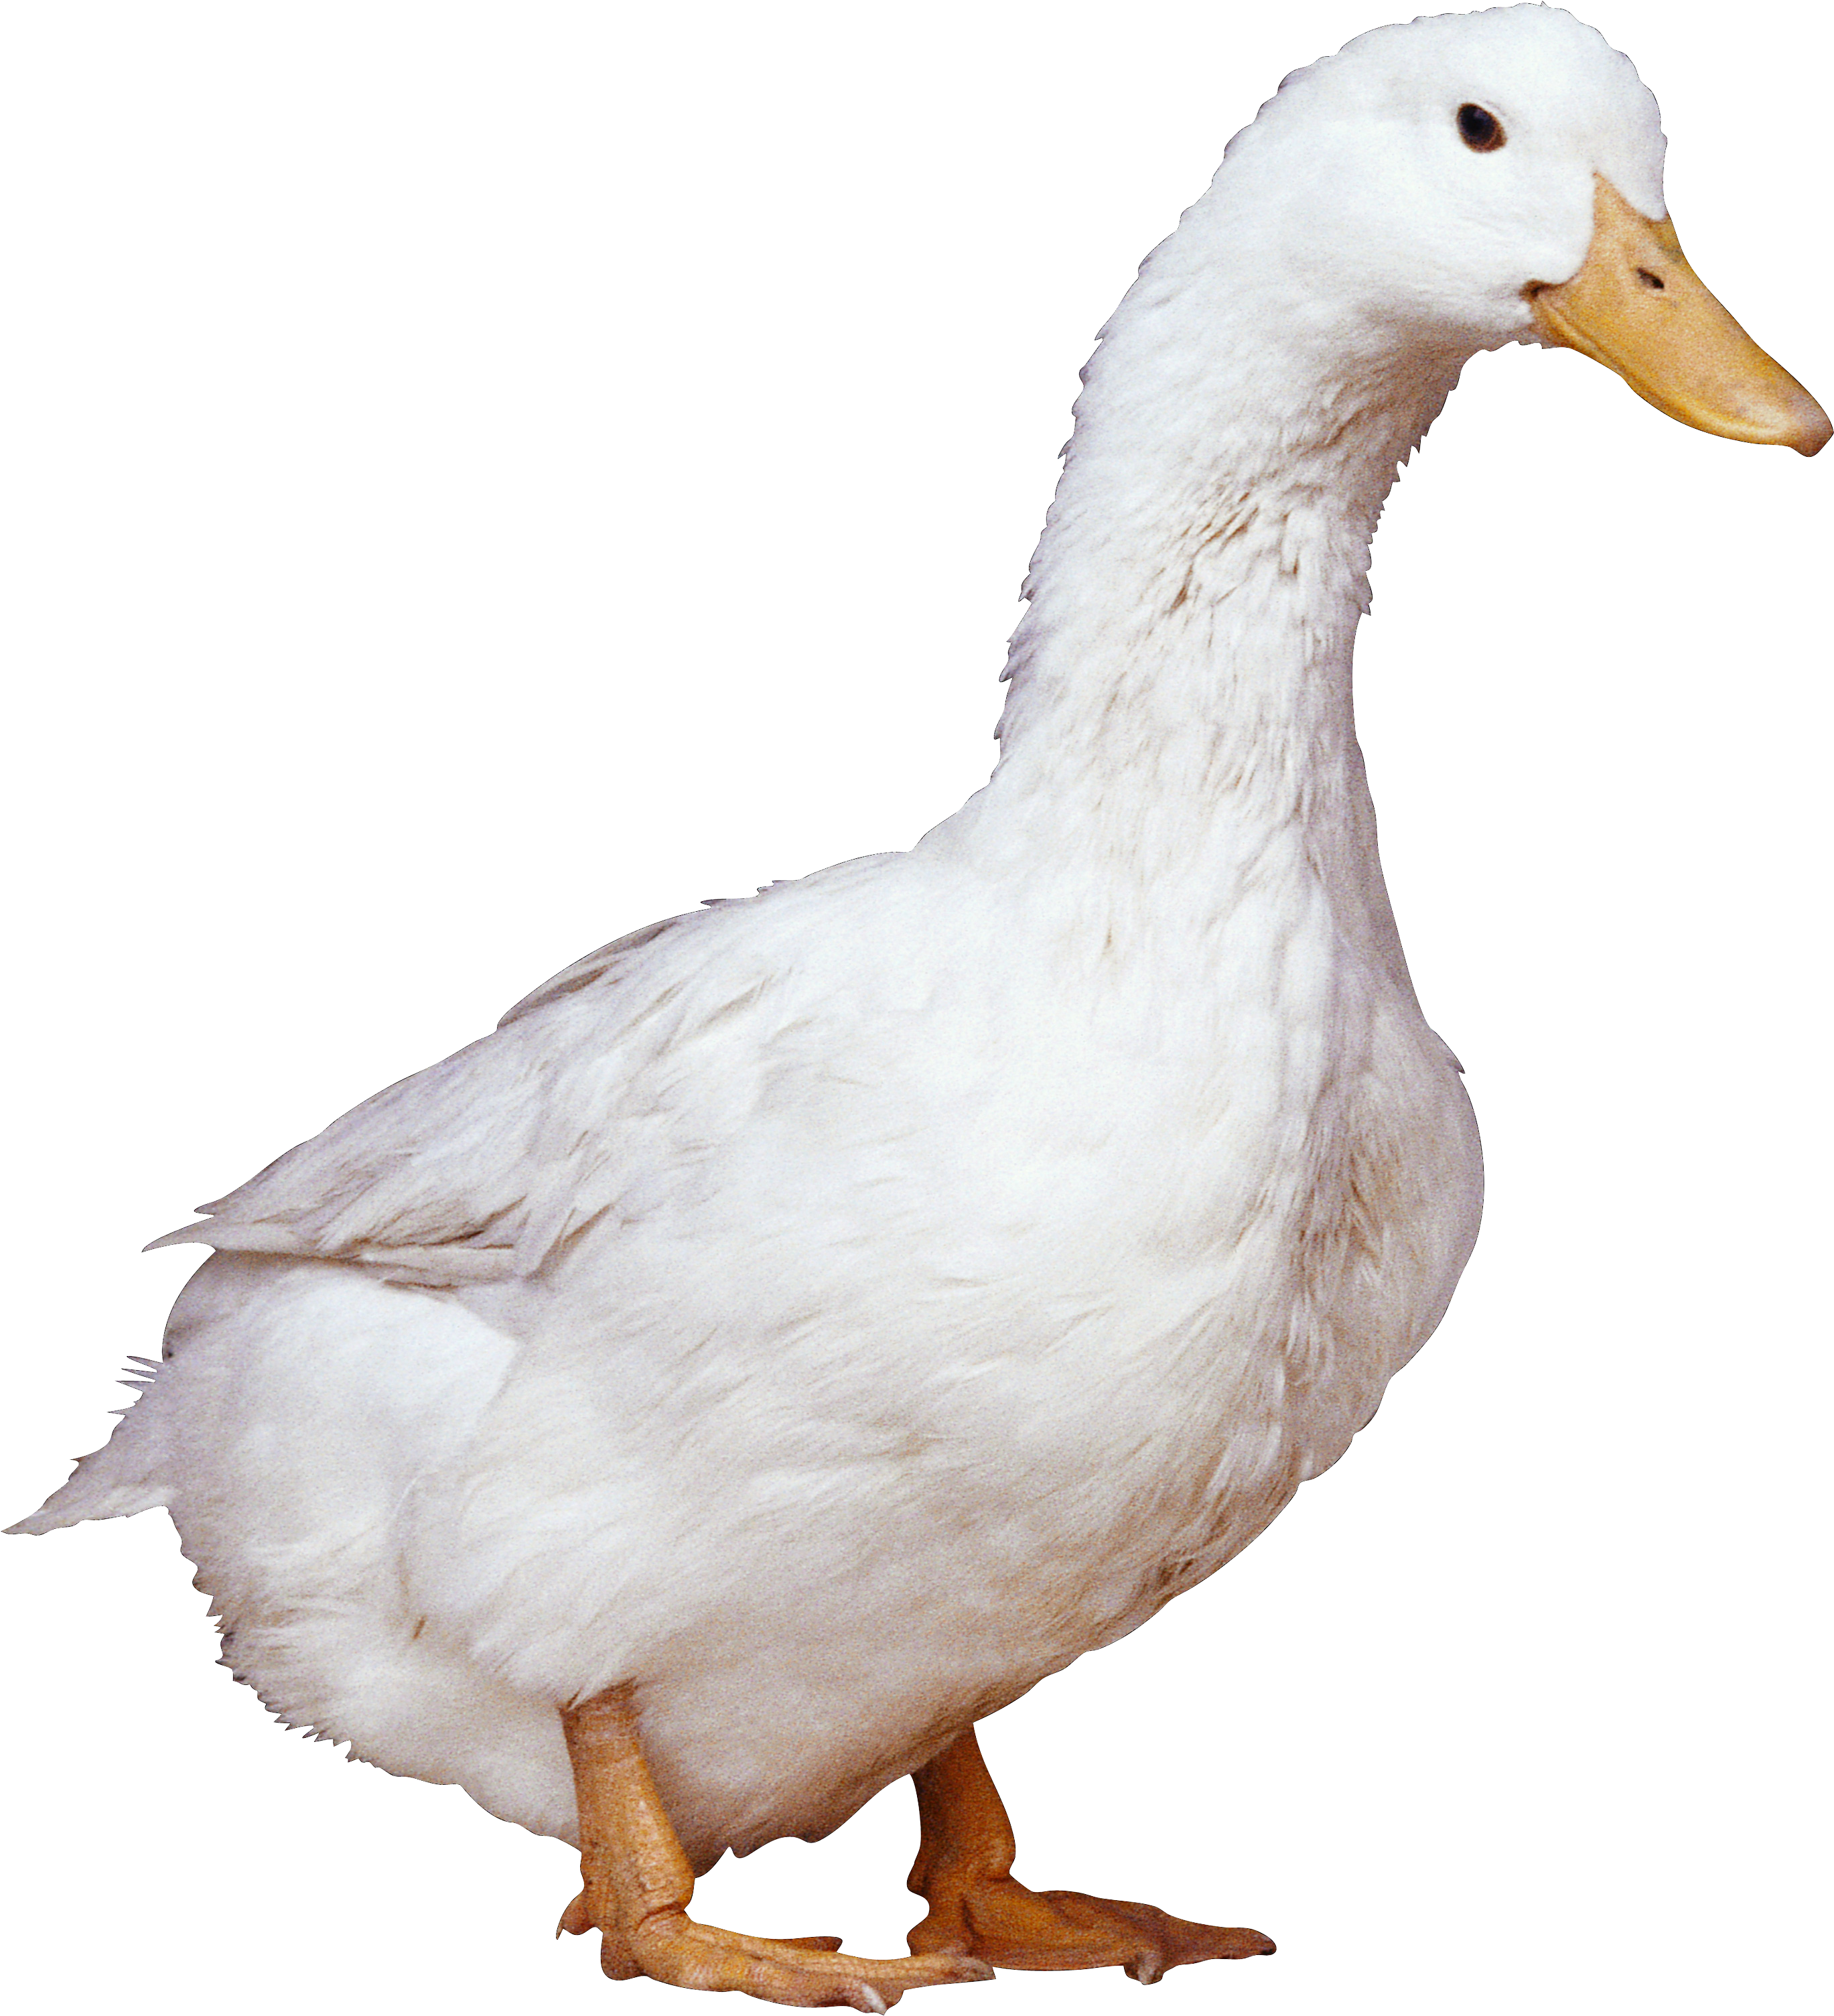 American Pekin Duck - White duck PNG image png download - 2738*3009 ...